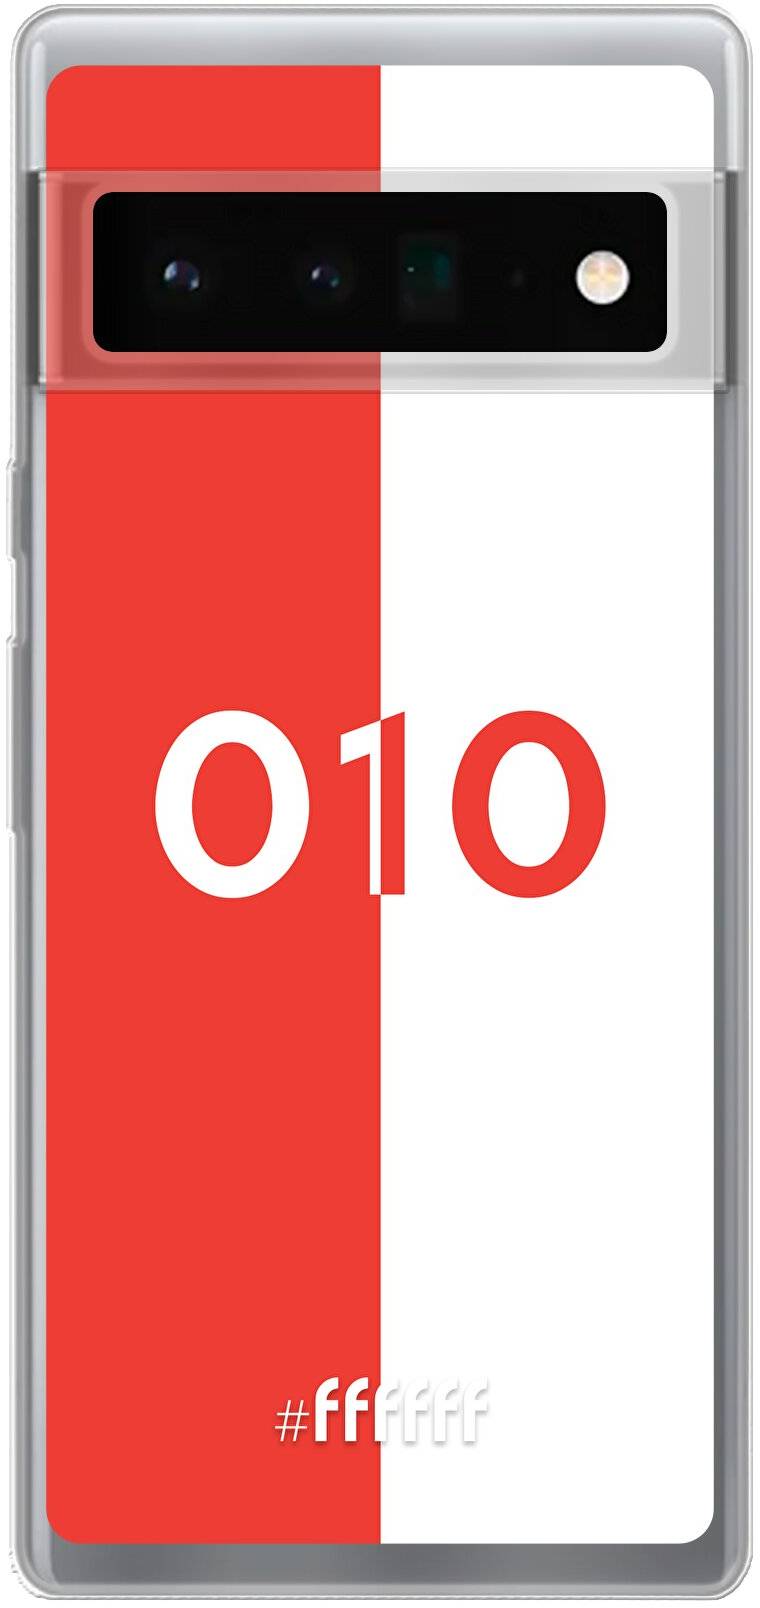 Feyenoord - 010 Pixel 6 Pro